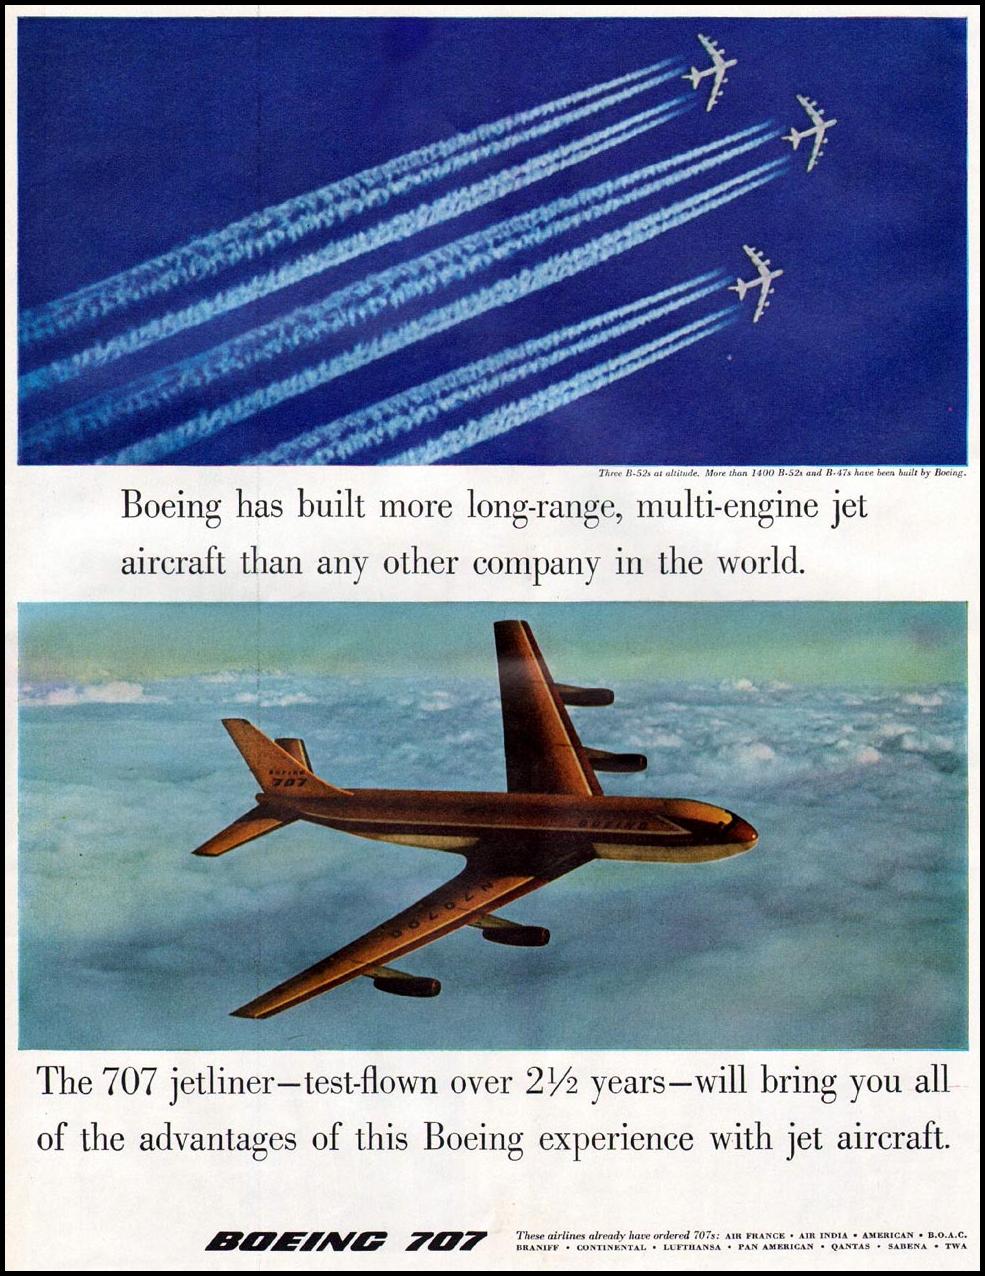 BOEING 707
LIFE
06/24/1957
p. 151